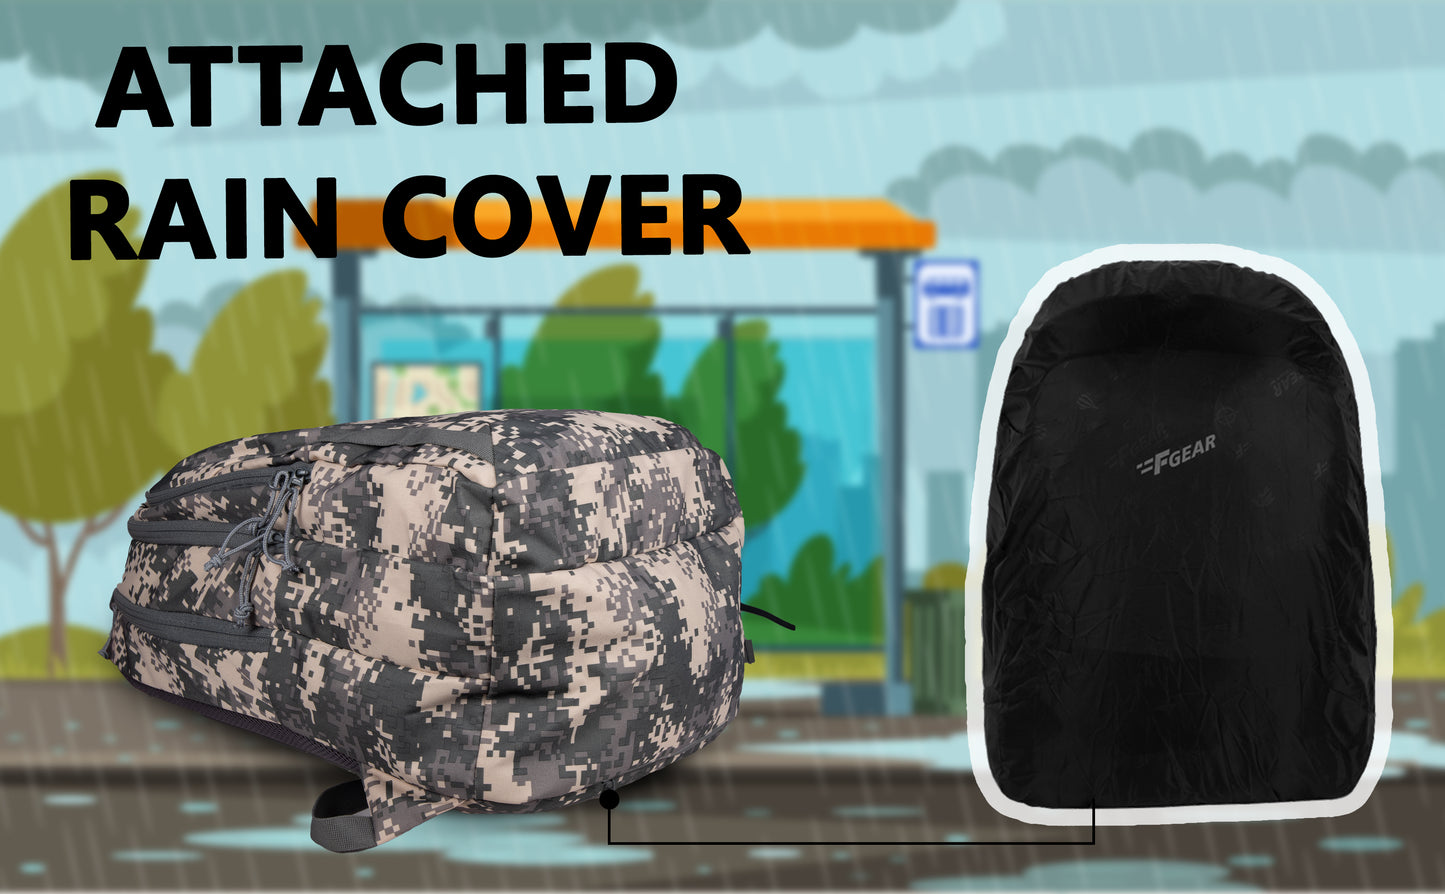 Military Raider 30L Marpat ACV Digital Camo Backpack With Rain Cover